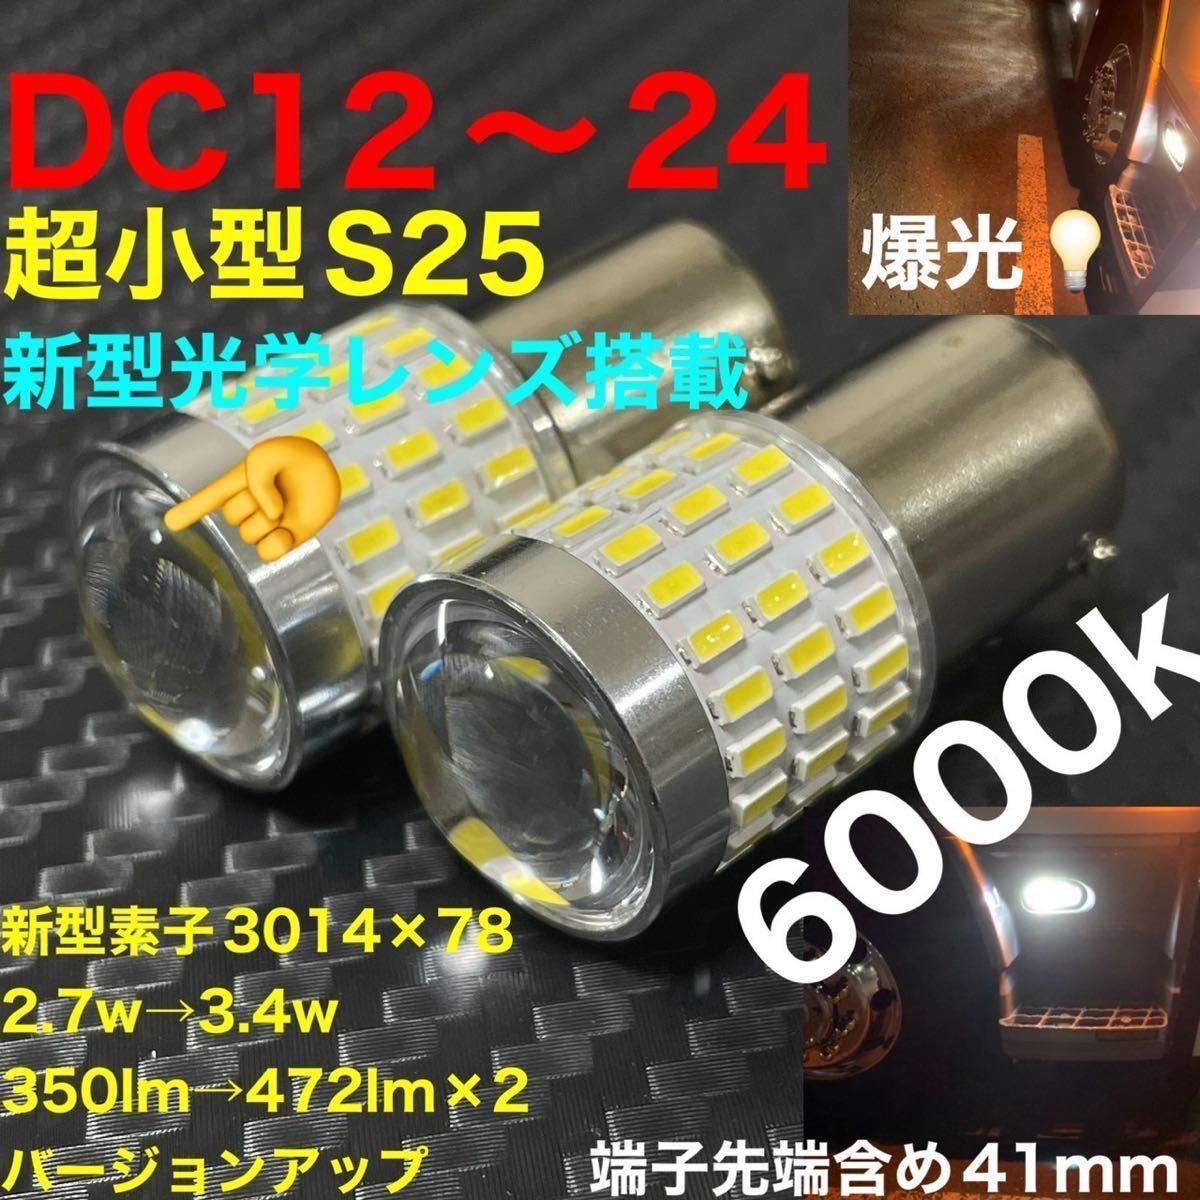 LED ba15s 1156 S25 シングル　バックランプ ナンバー灯 リバース 12V 24V 兼用 無極性新型素子3014×78 3.4w 472lm×2 バージョンアップ_画像1